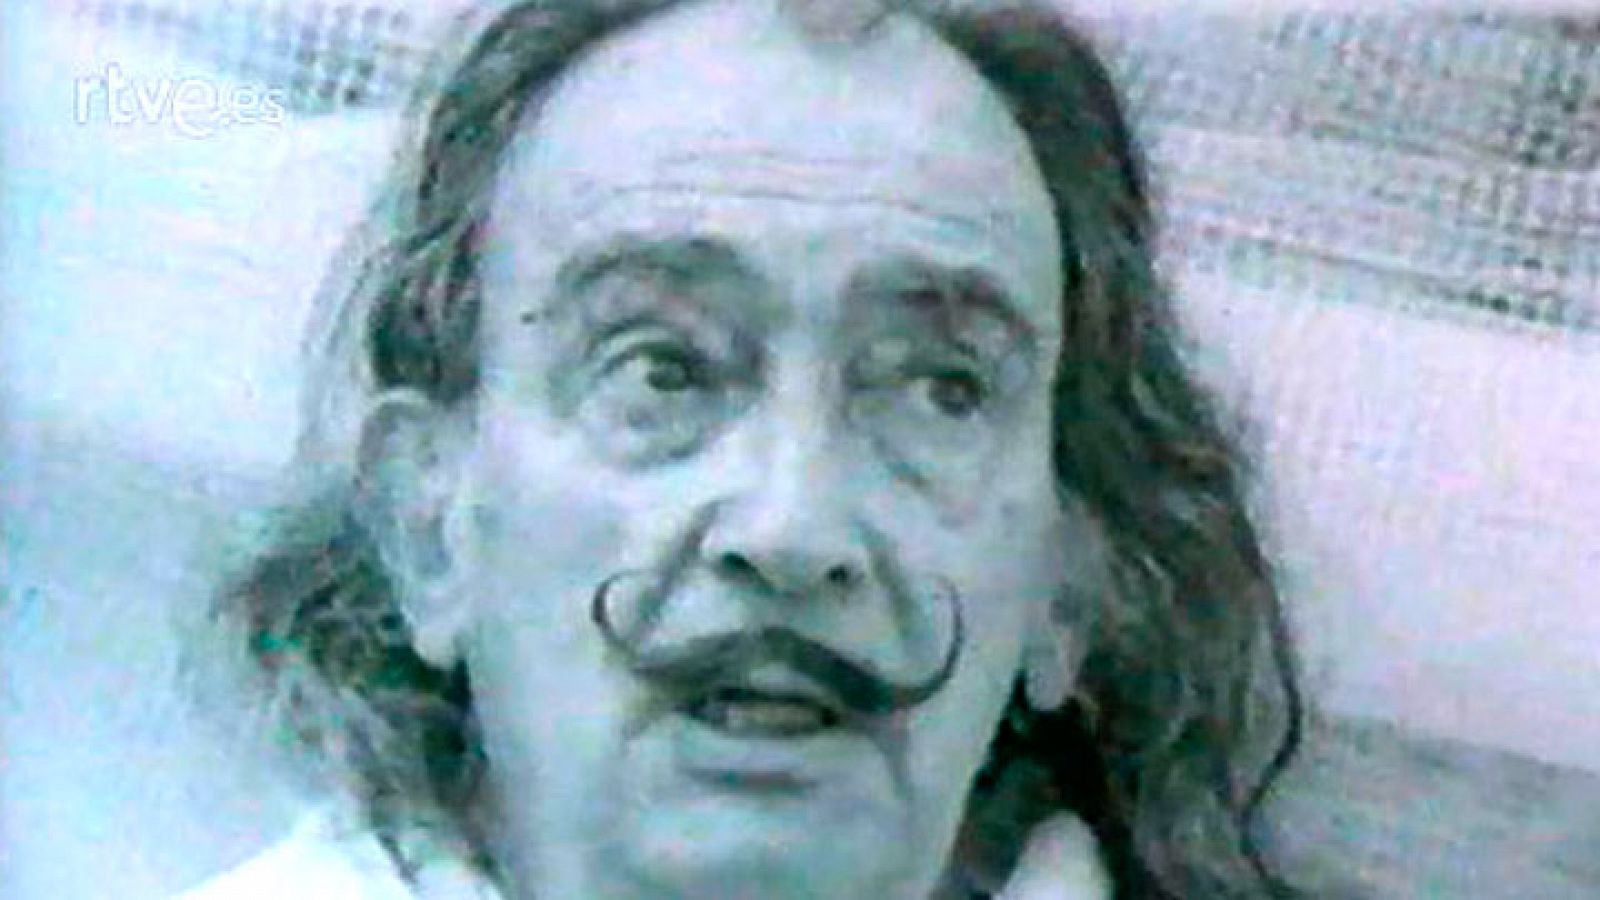 Arxiu TVE Catalunya - Dalí 1904-1989 - Sí No: entrevista a Salvador Dalí